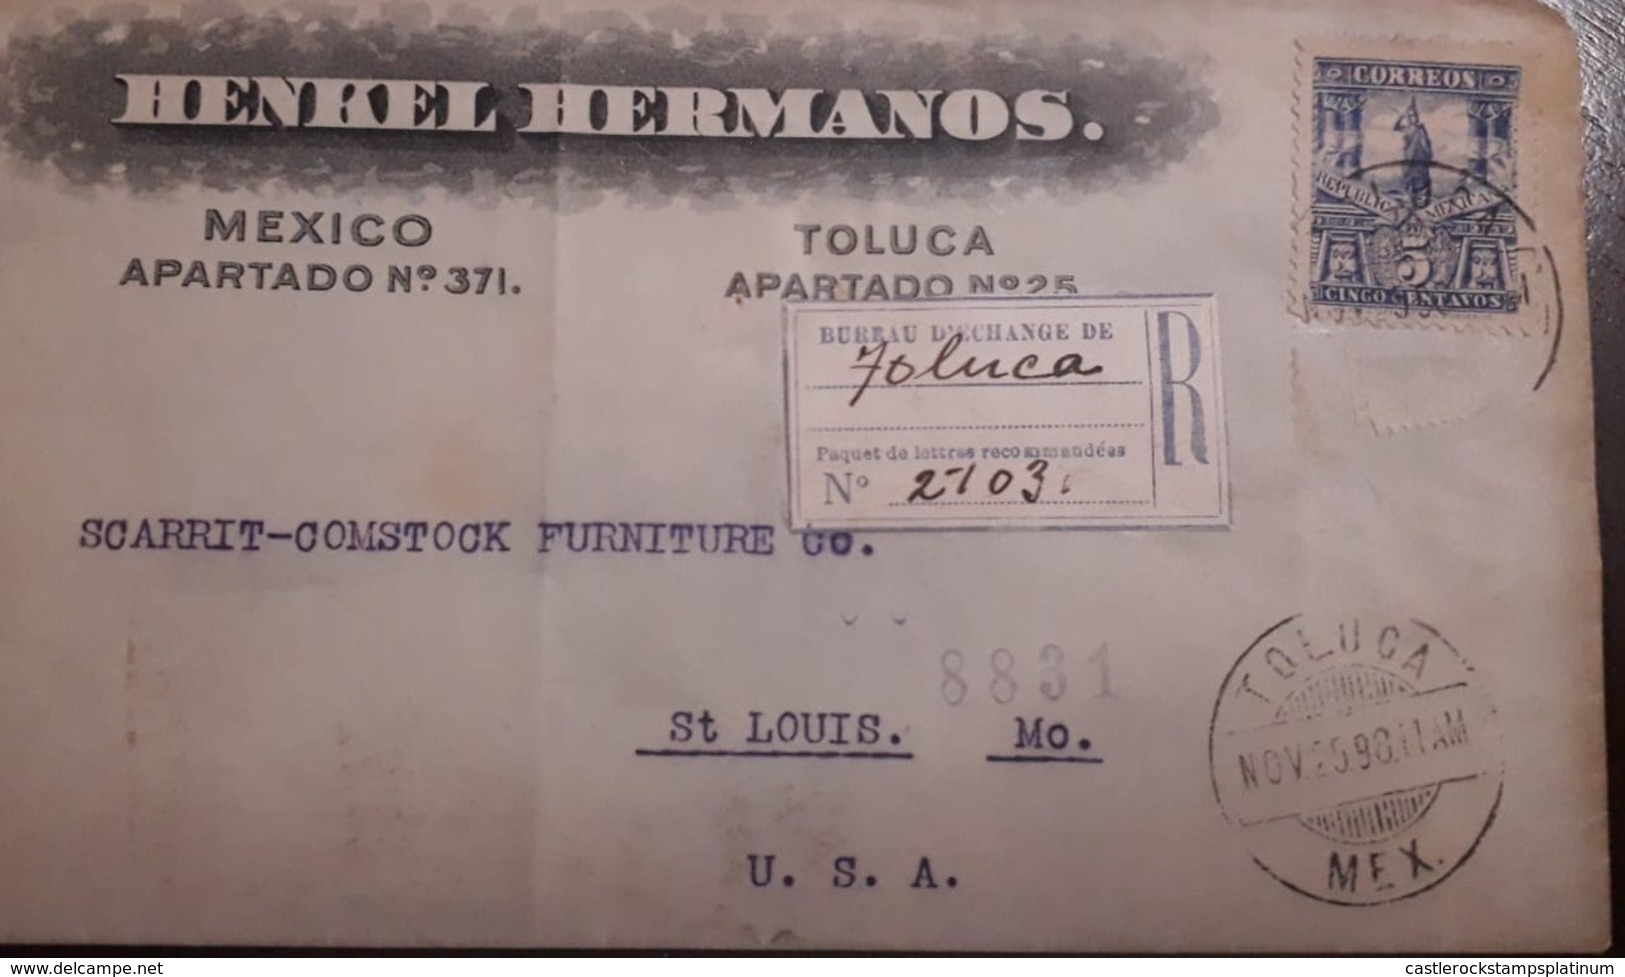 O) 1898 MEXICO, CUAUHTEMOC SC 247 5c, HENKEL HERMANOS - TOLUCA TO USA - Mexico